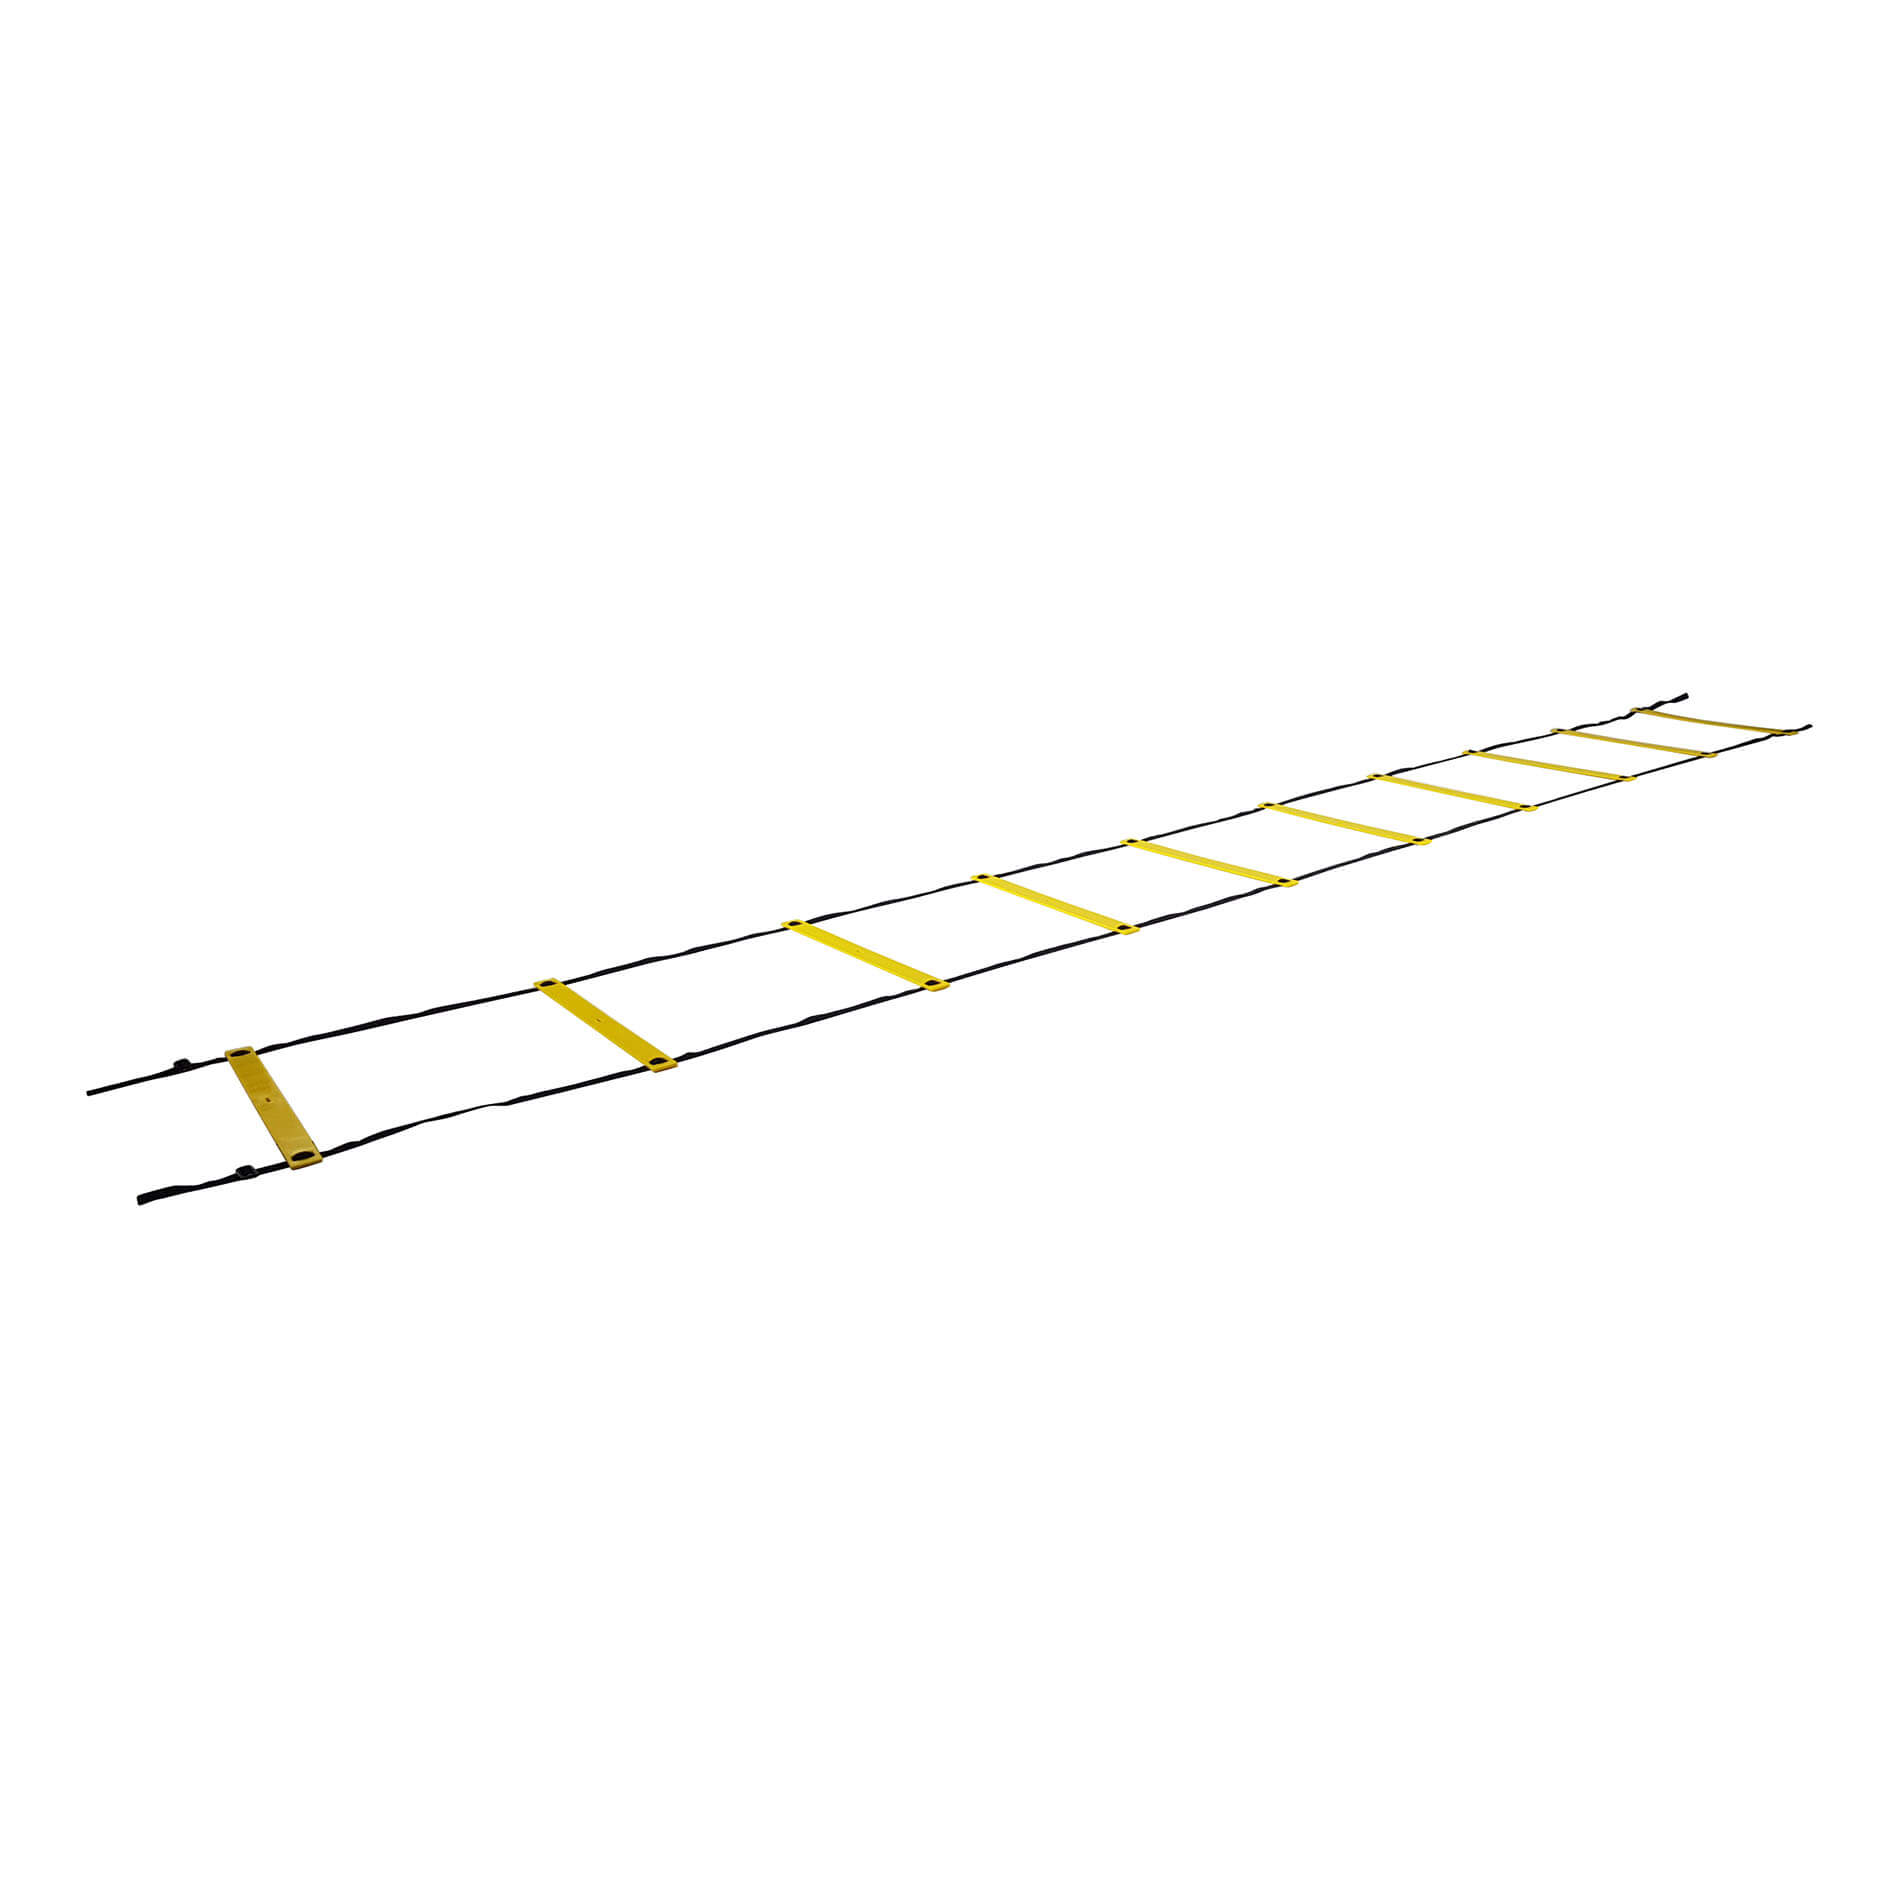 Agility Ladder - Speed ladder - Fitness ladder - Loop ladder - 4.5m